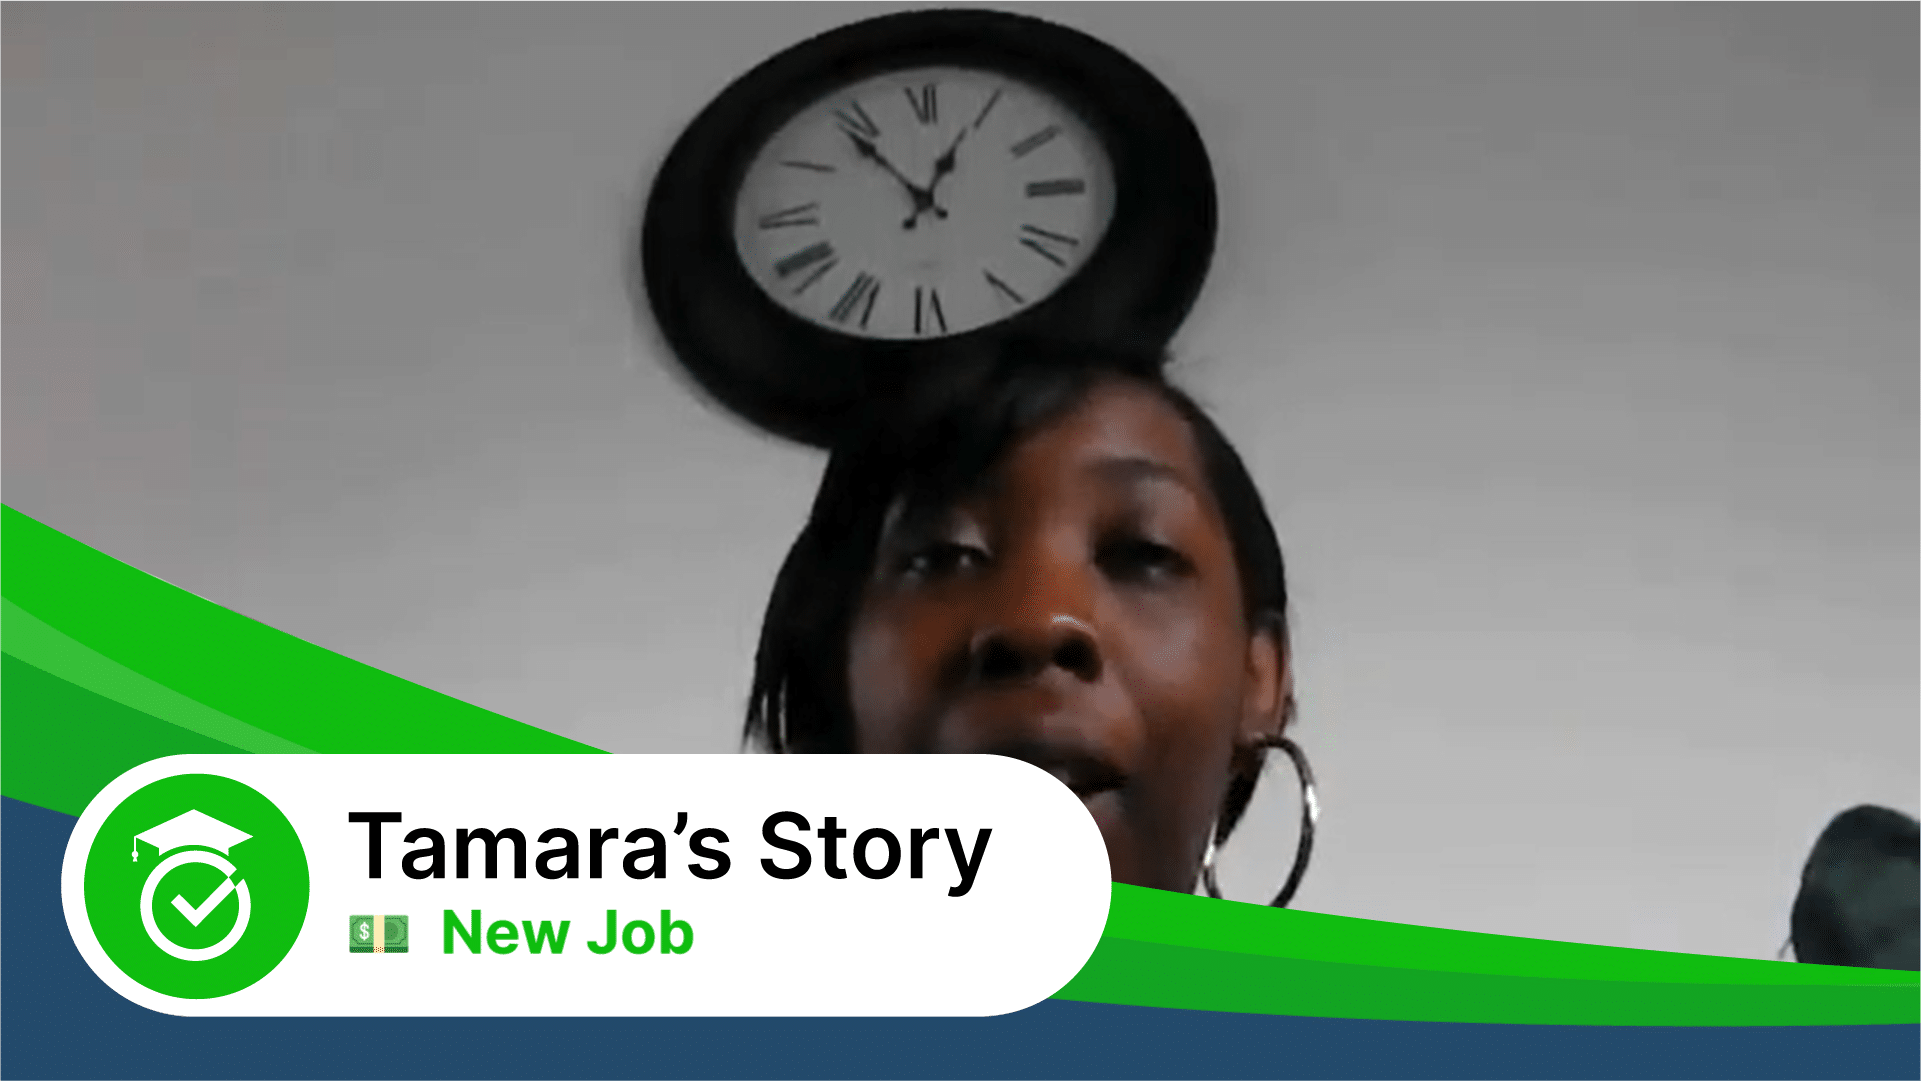 Tamara's Story - Applying for a New Job testimonial